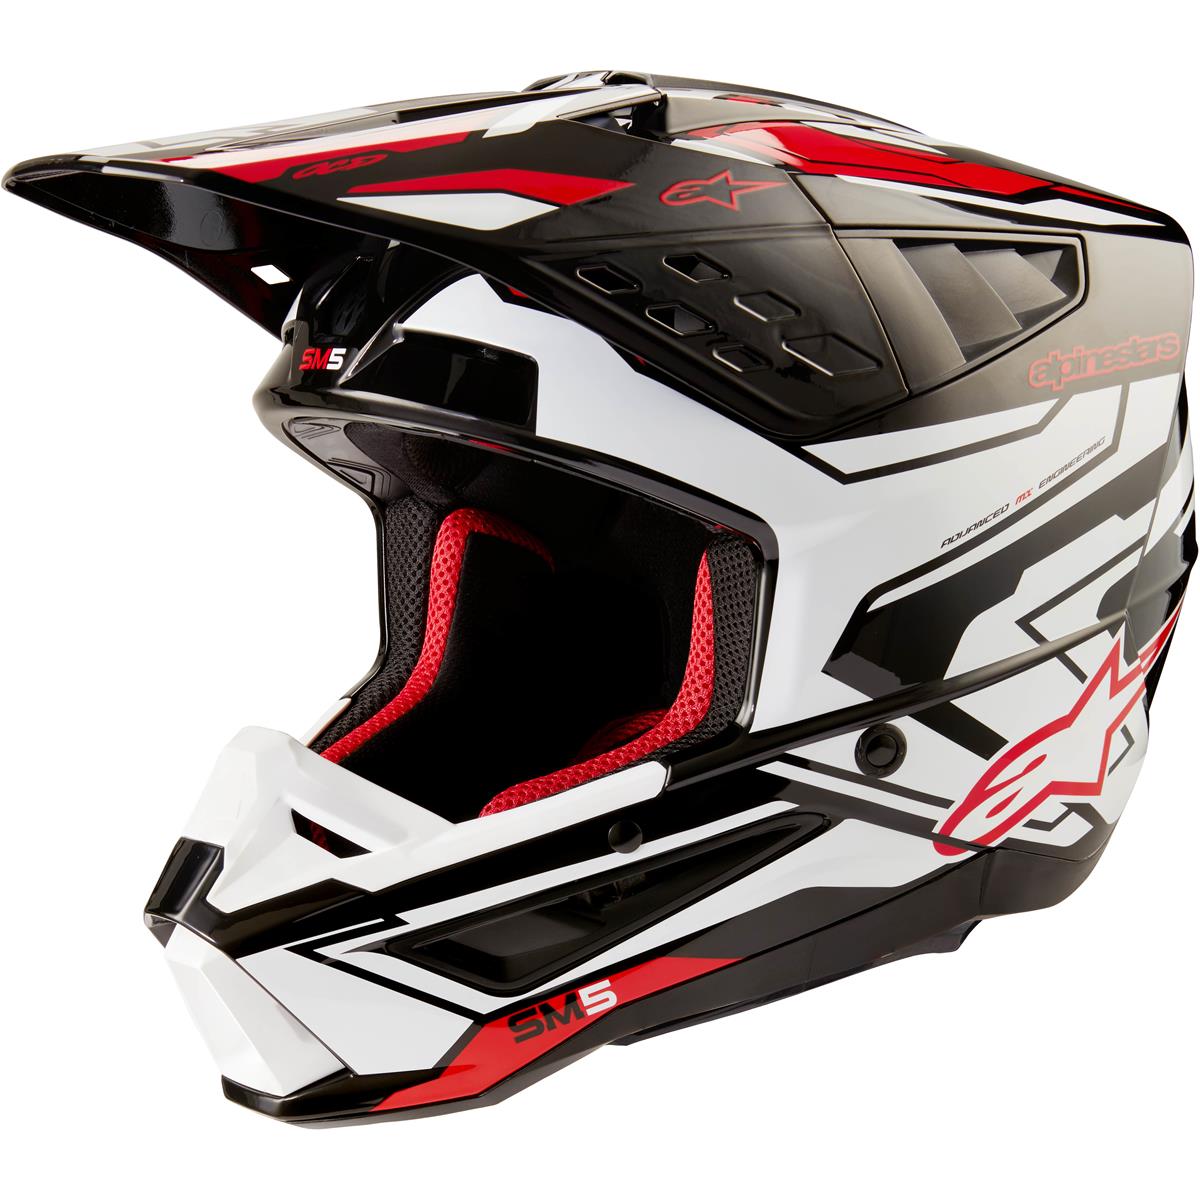 Alpinestars Motocross-Helm S-M5 Action 2 - Schwarz/Weiß/Rot/Glossy